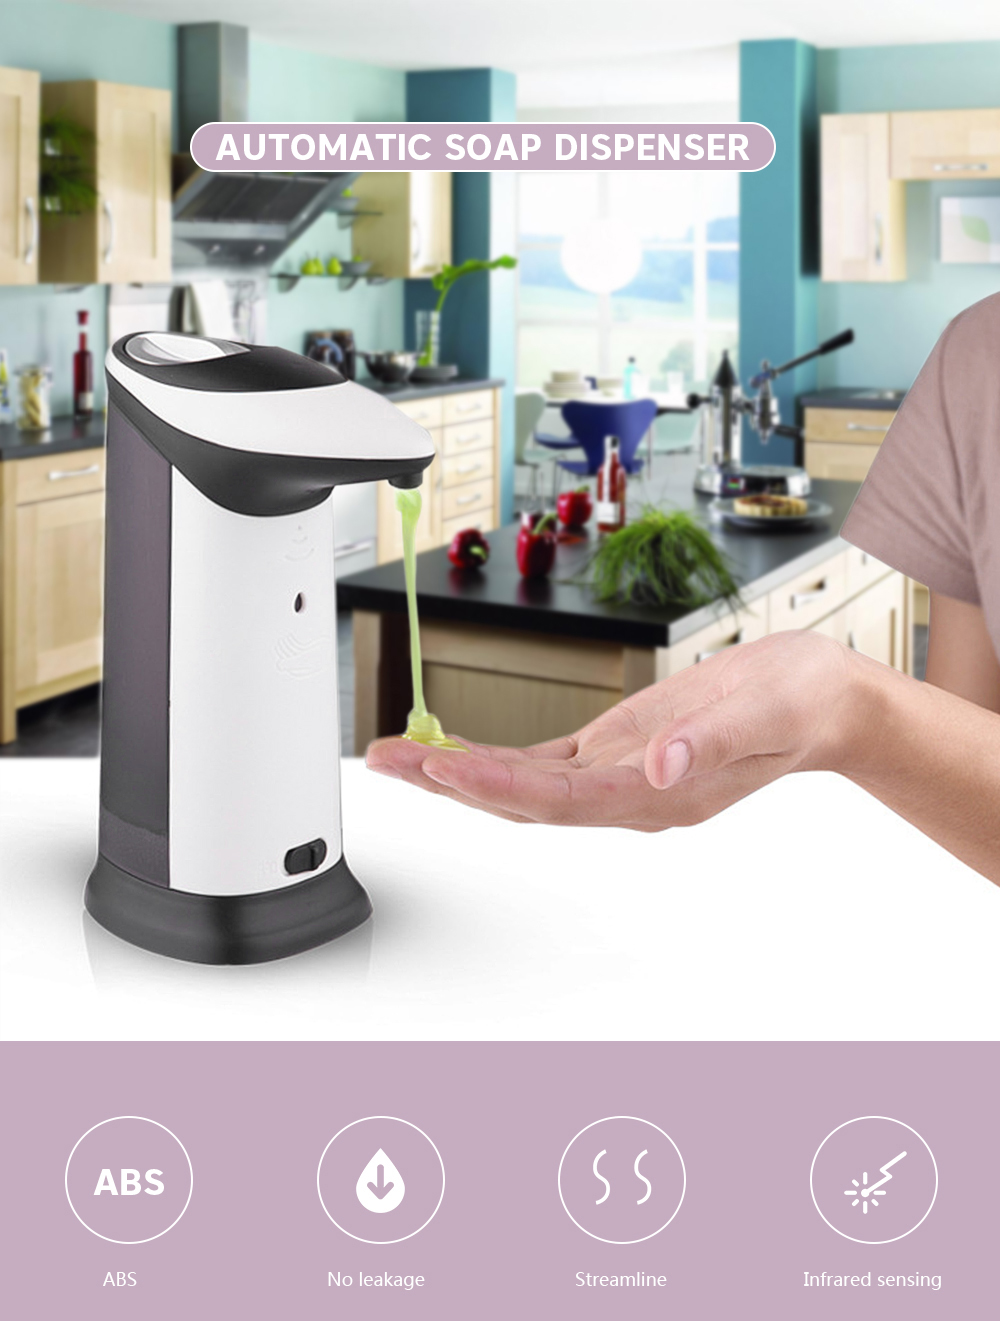 Hands Free Automatic Infrared Sensor Soap Dispenser for Bathroom Kitchen